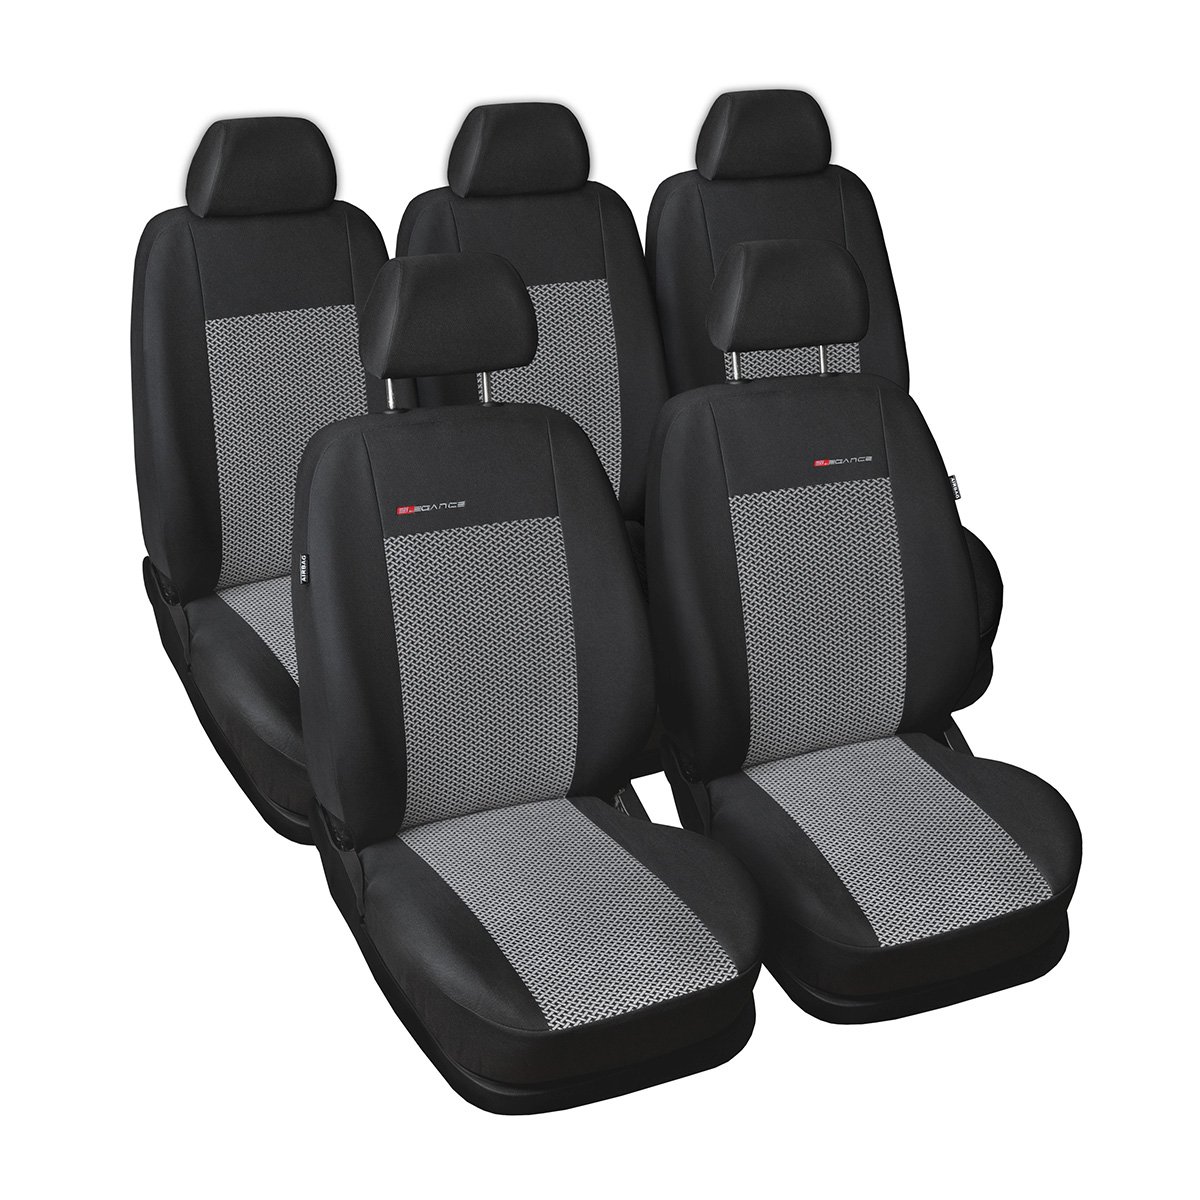 Mossa - Maßgeschneiderte Sitzbezüge Auto kompatibel mit Volkswagen Sharan II Van (2010- ) - 5 Sitzer - Autositzbezüge Schonbezüge für Autositze - E2 von Mossa